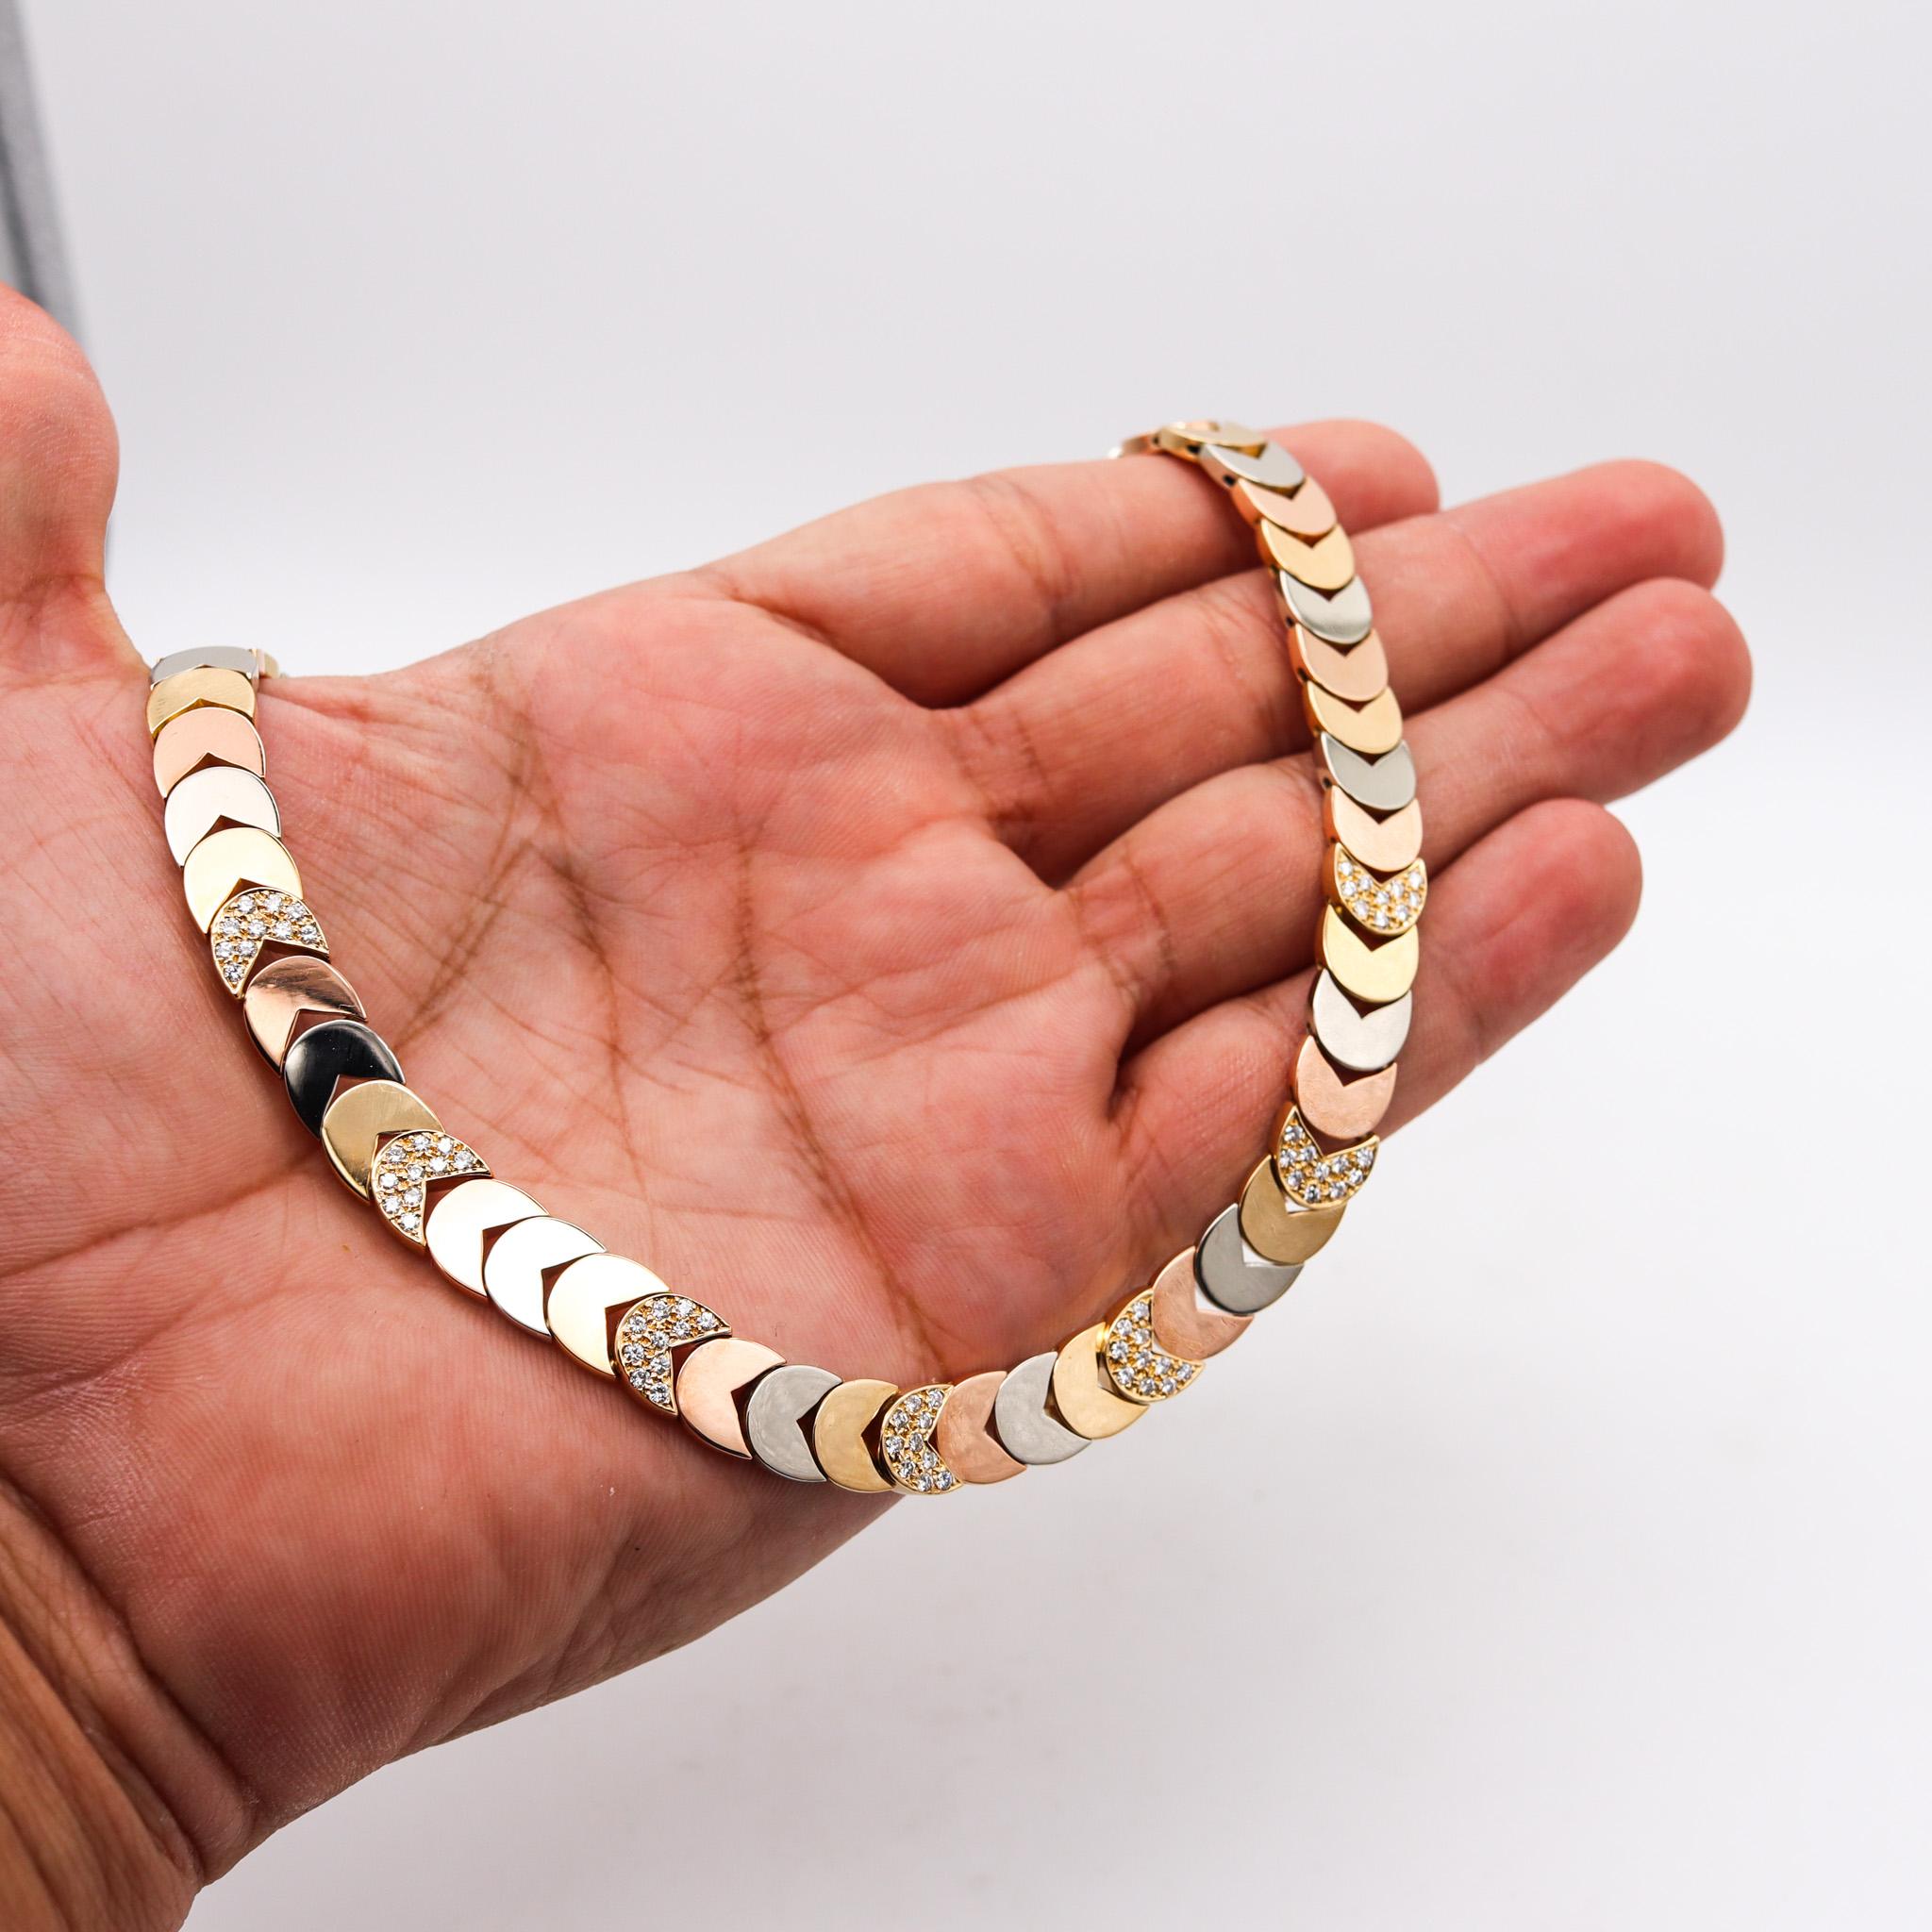 Van Cleef & Arpels Paris Diamonds Collar Necklace In Three colors 18Kt Gold For Sale 4